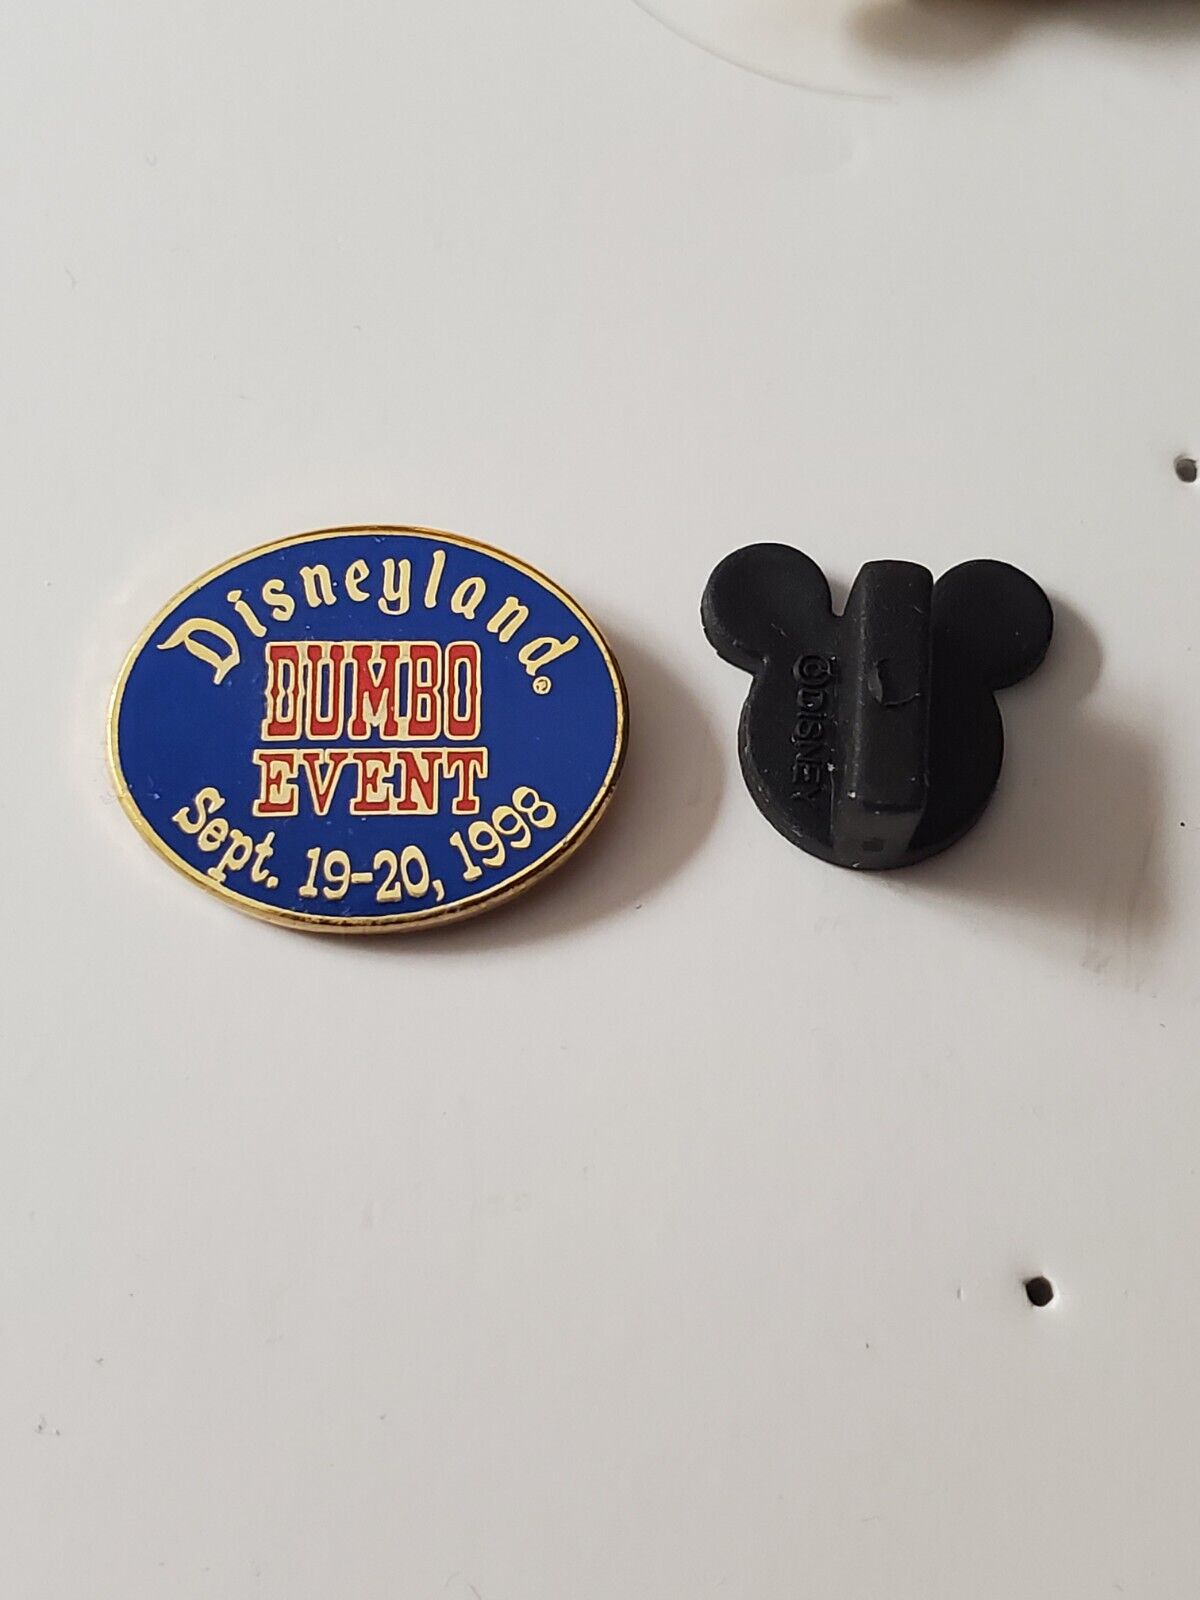 Disneyland Dumbo Event Sept 19-20 1998 Pin